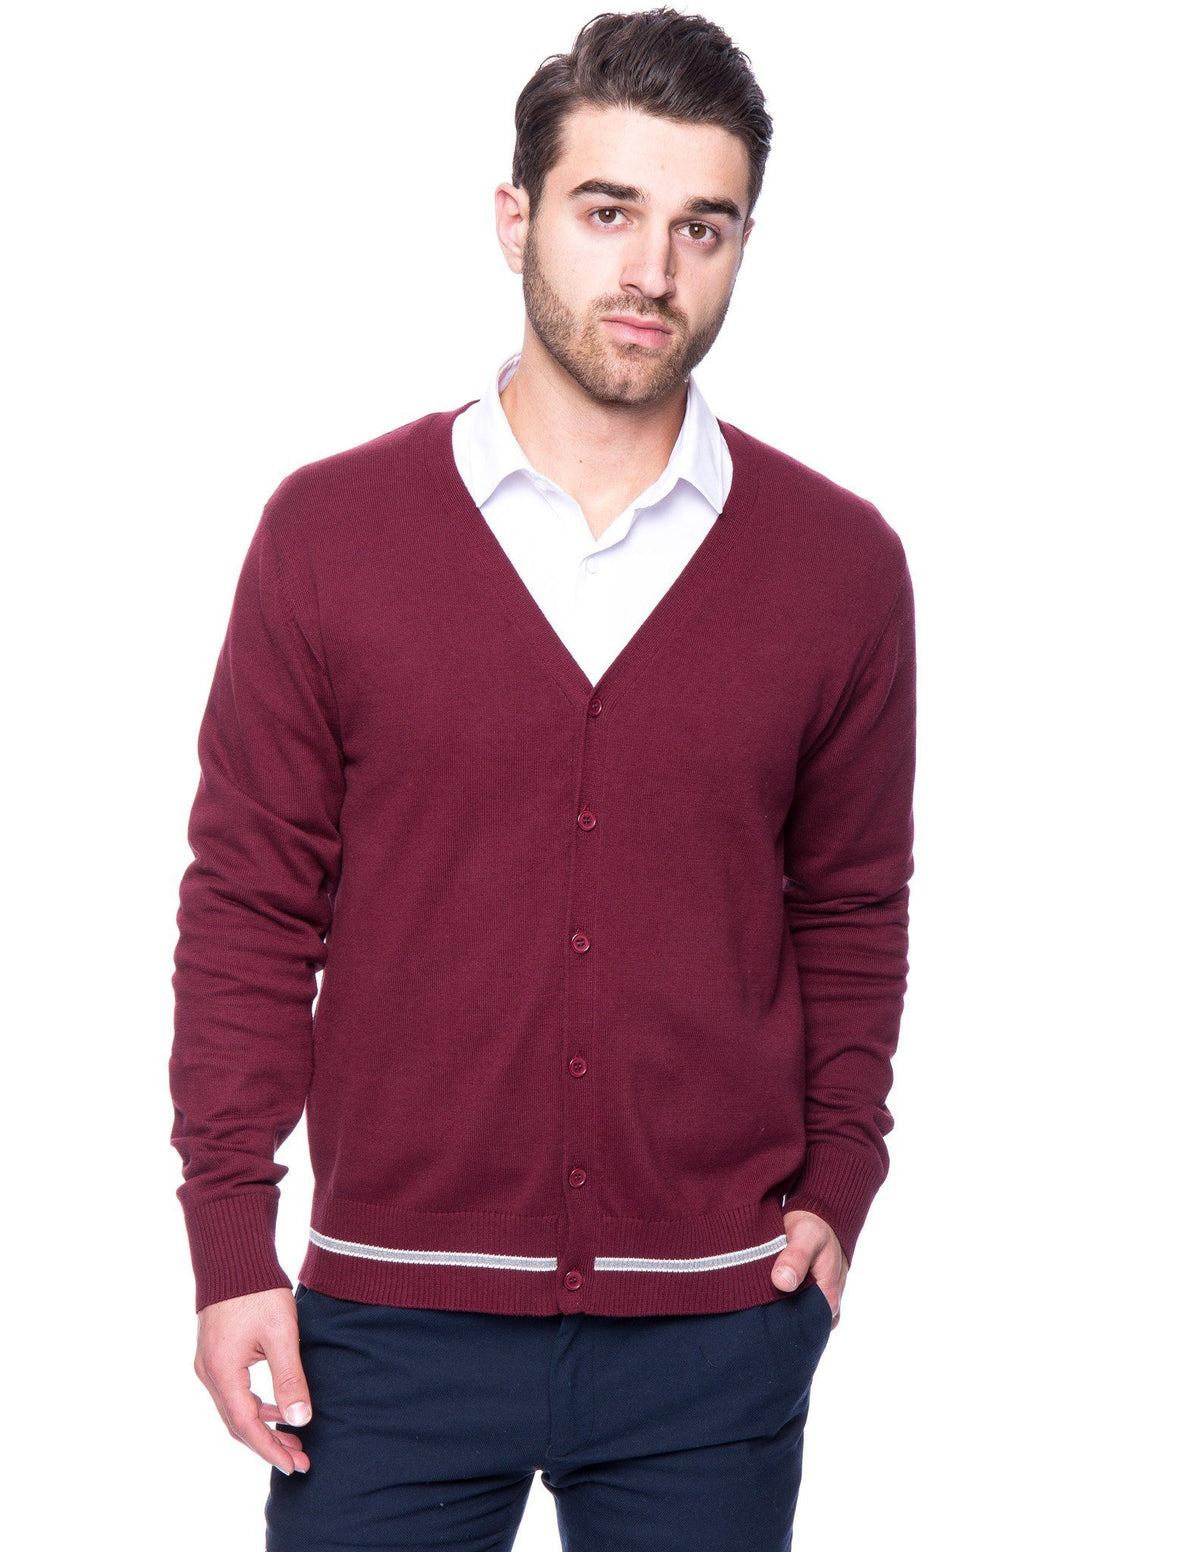 Men's 100% Cotton Cardigan Sweater - Burgundy